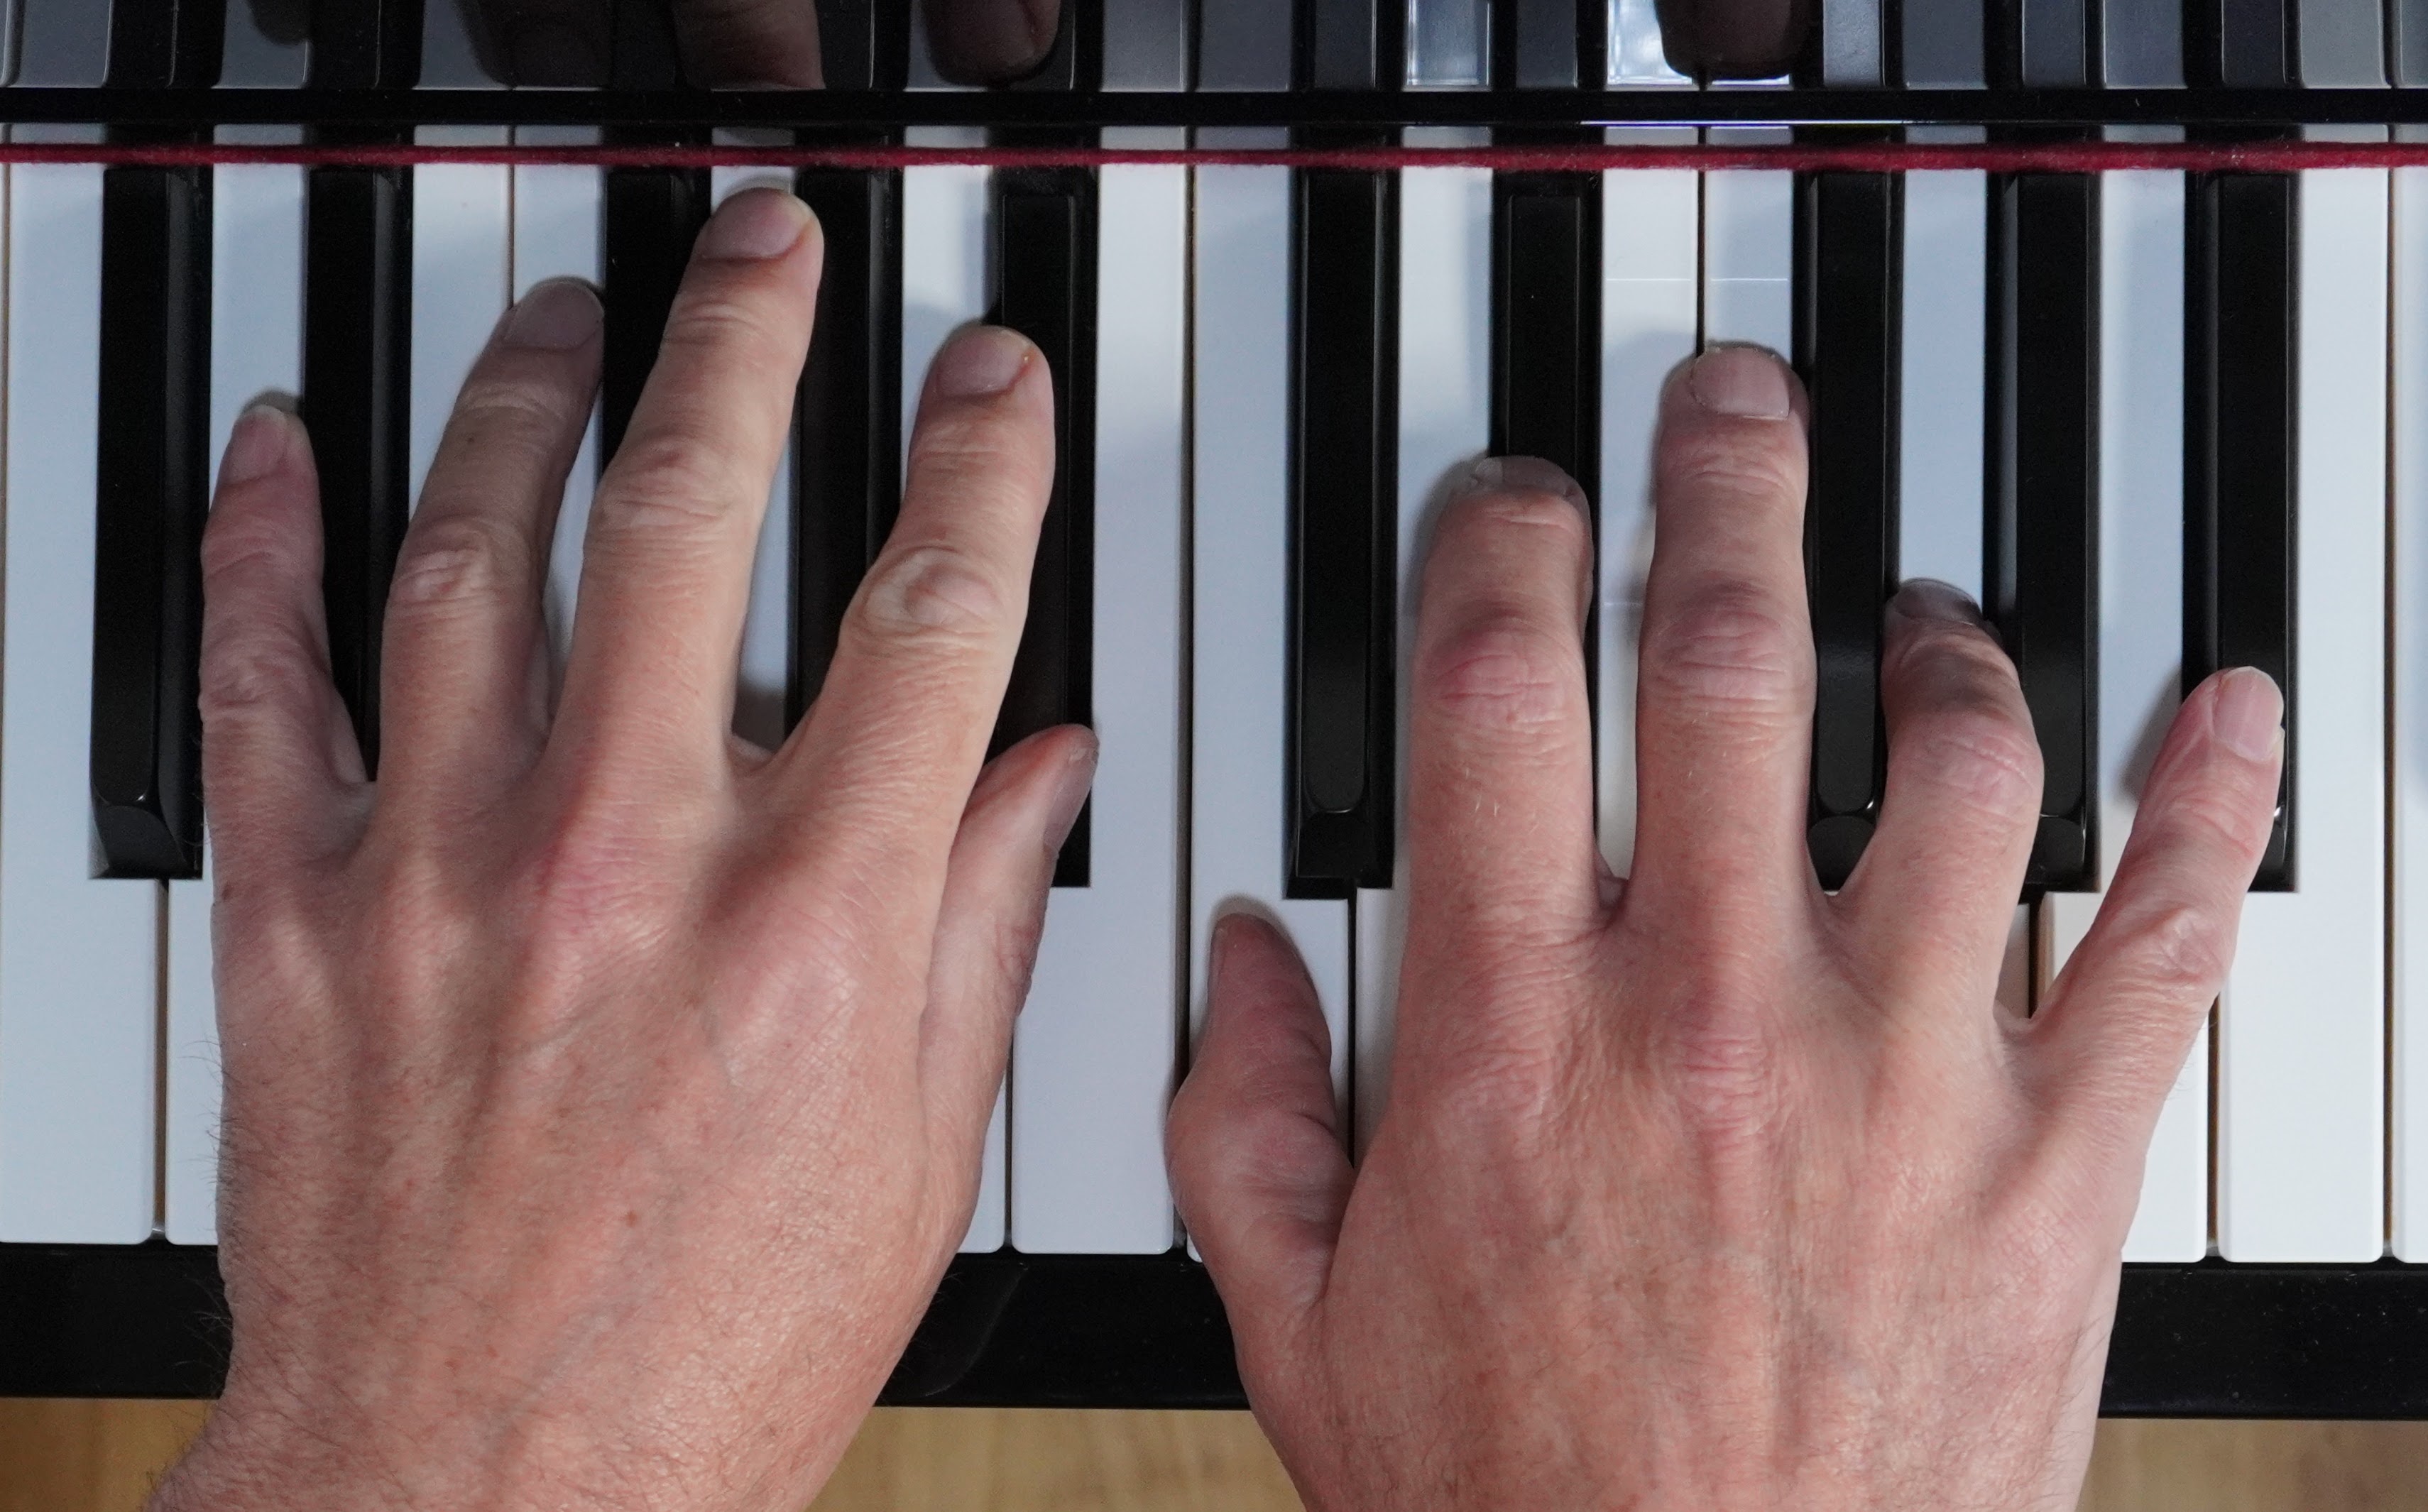 Julian Lamberts hands on the piano keyboard